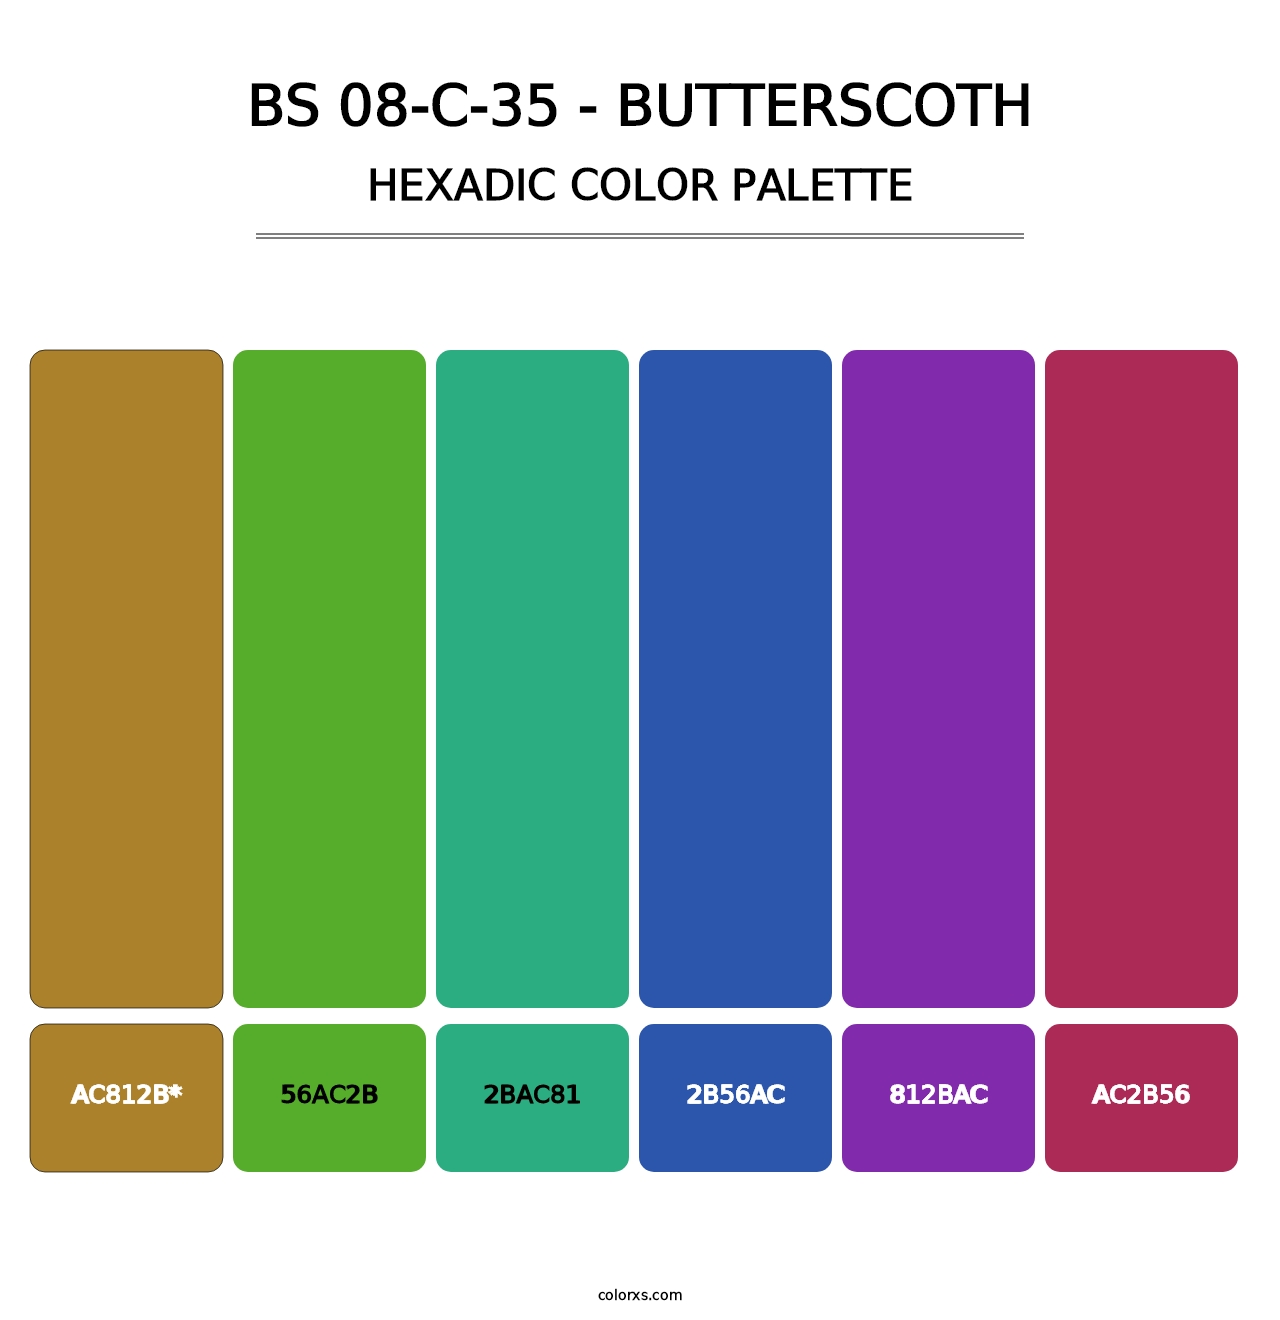 BS 08-C-35 - Butterscoth - Hexadic Color Palette